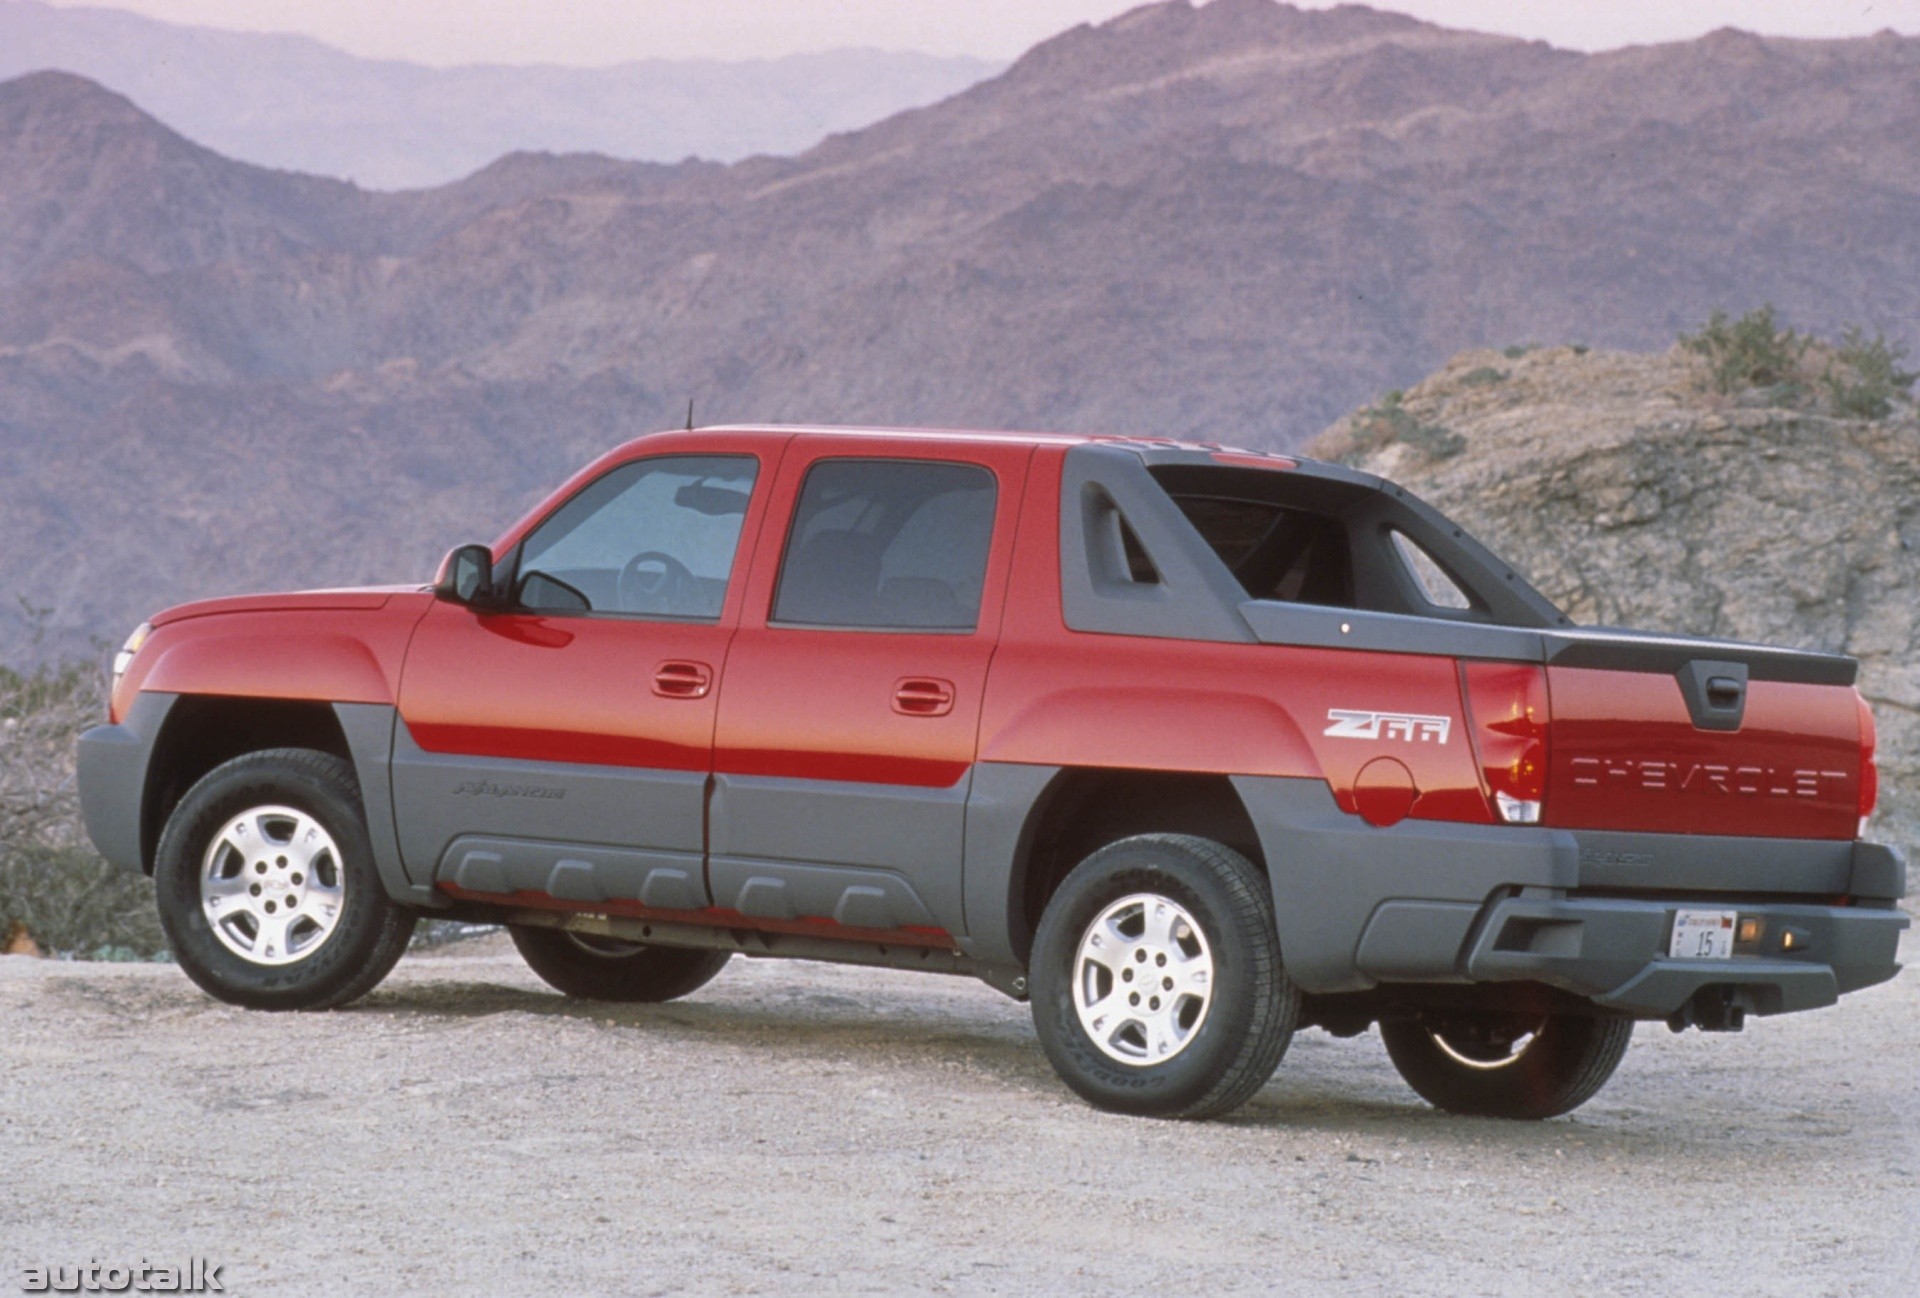 2002 Chevrolet Avalanche